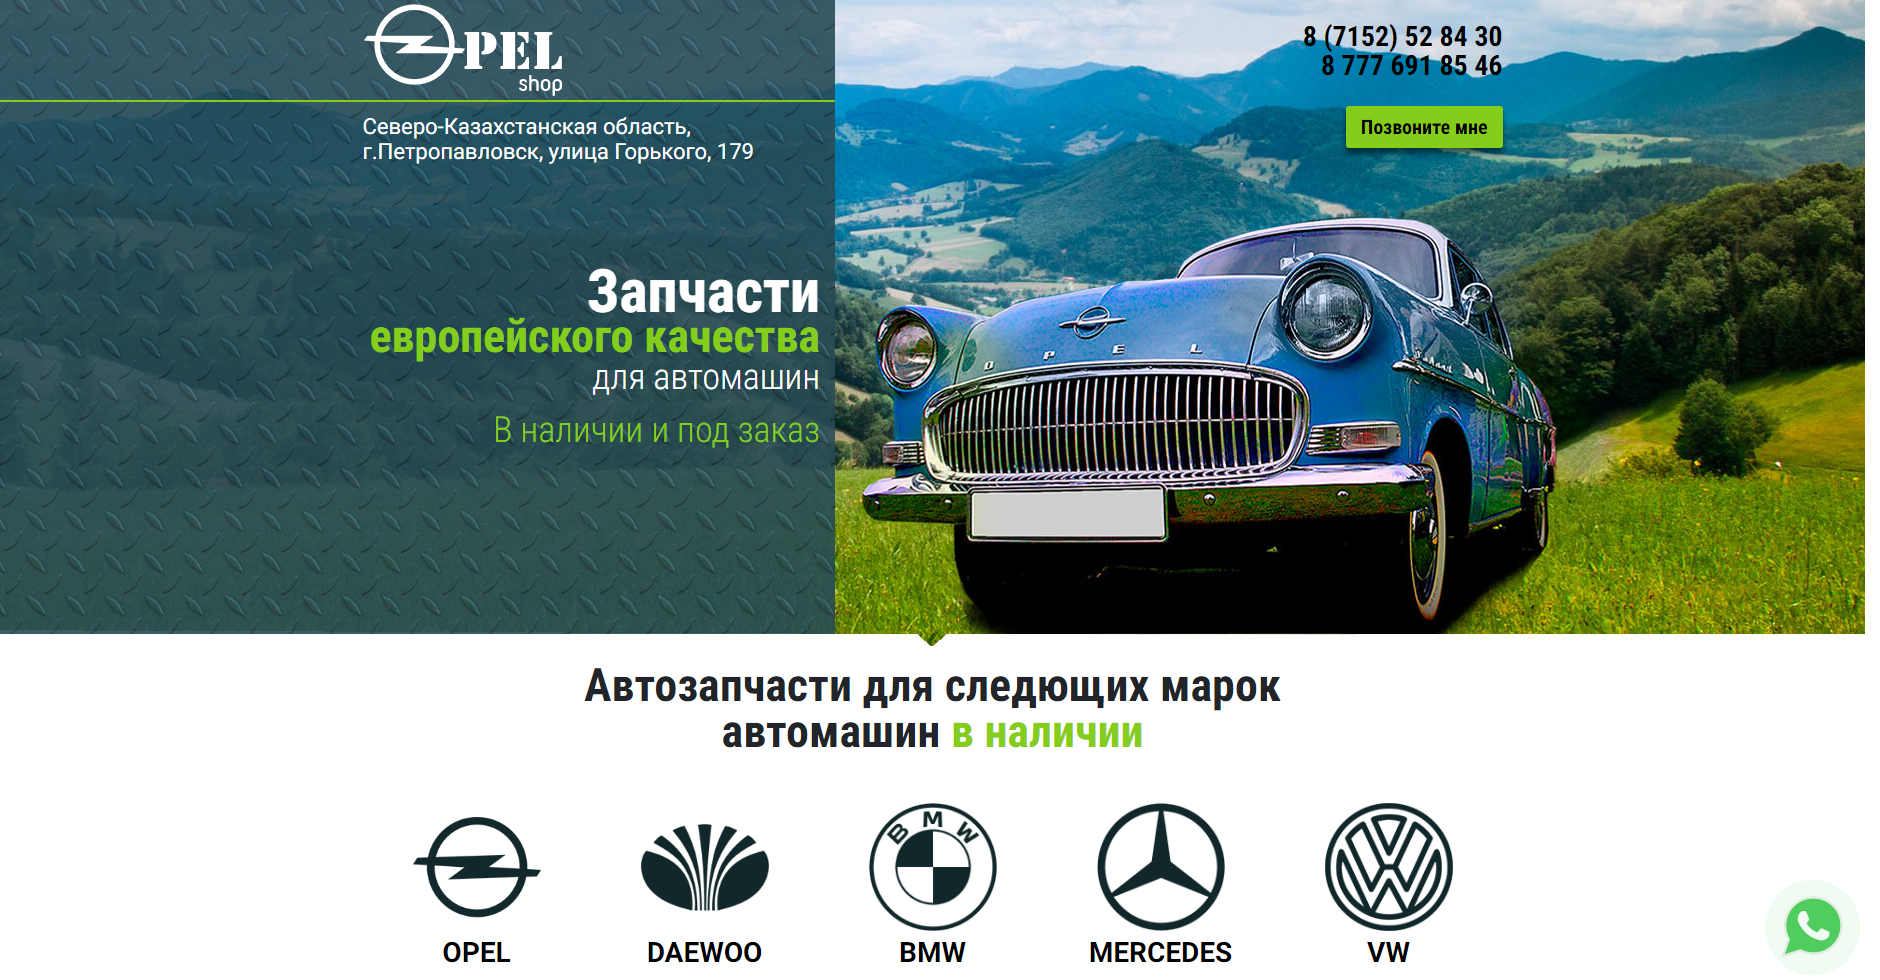 Создание landing-page для магазина автозапчастей Opel в Петропавловске - http://opelshop.kz/